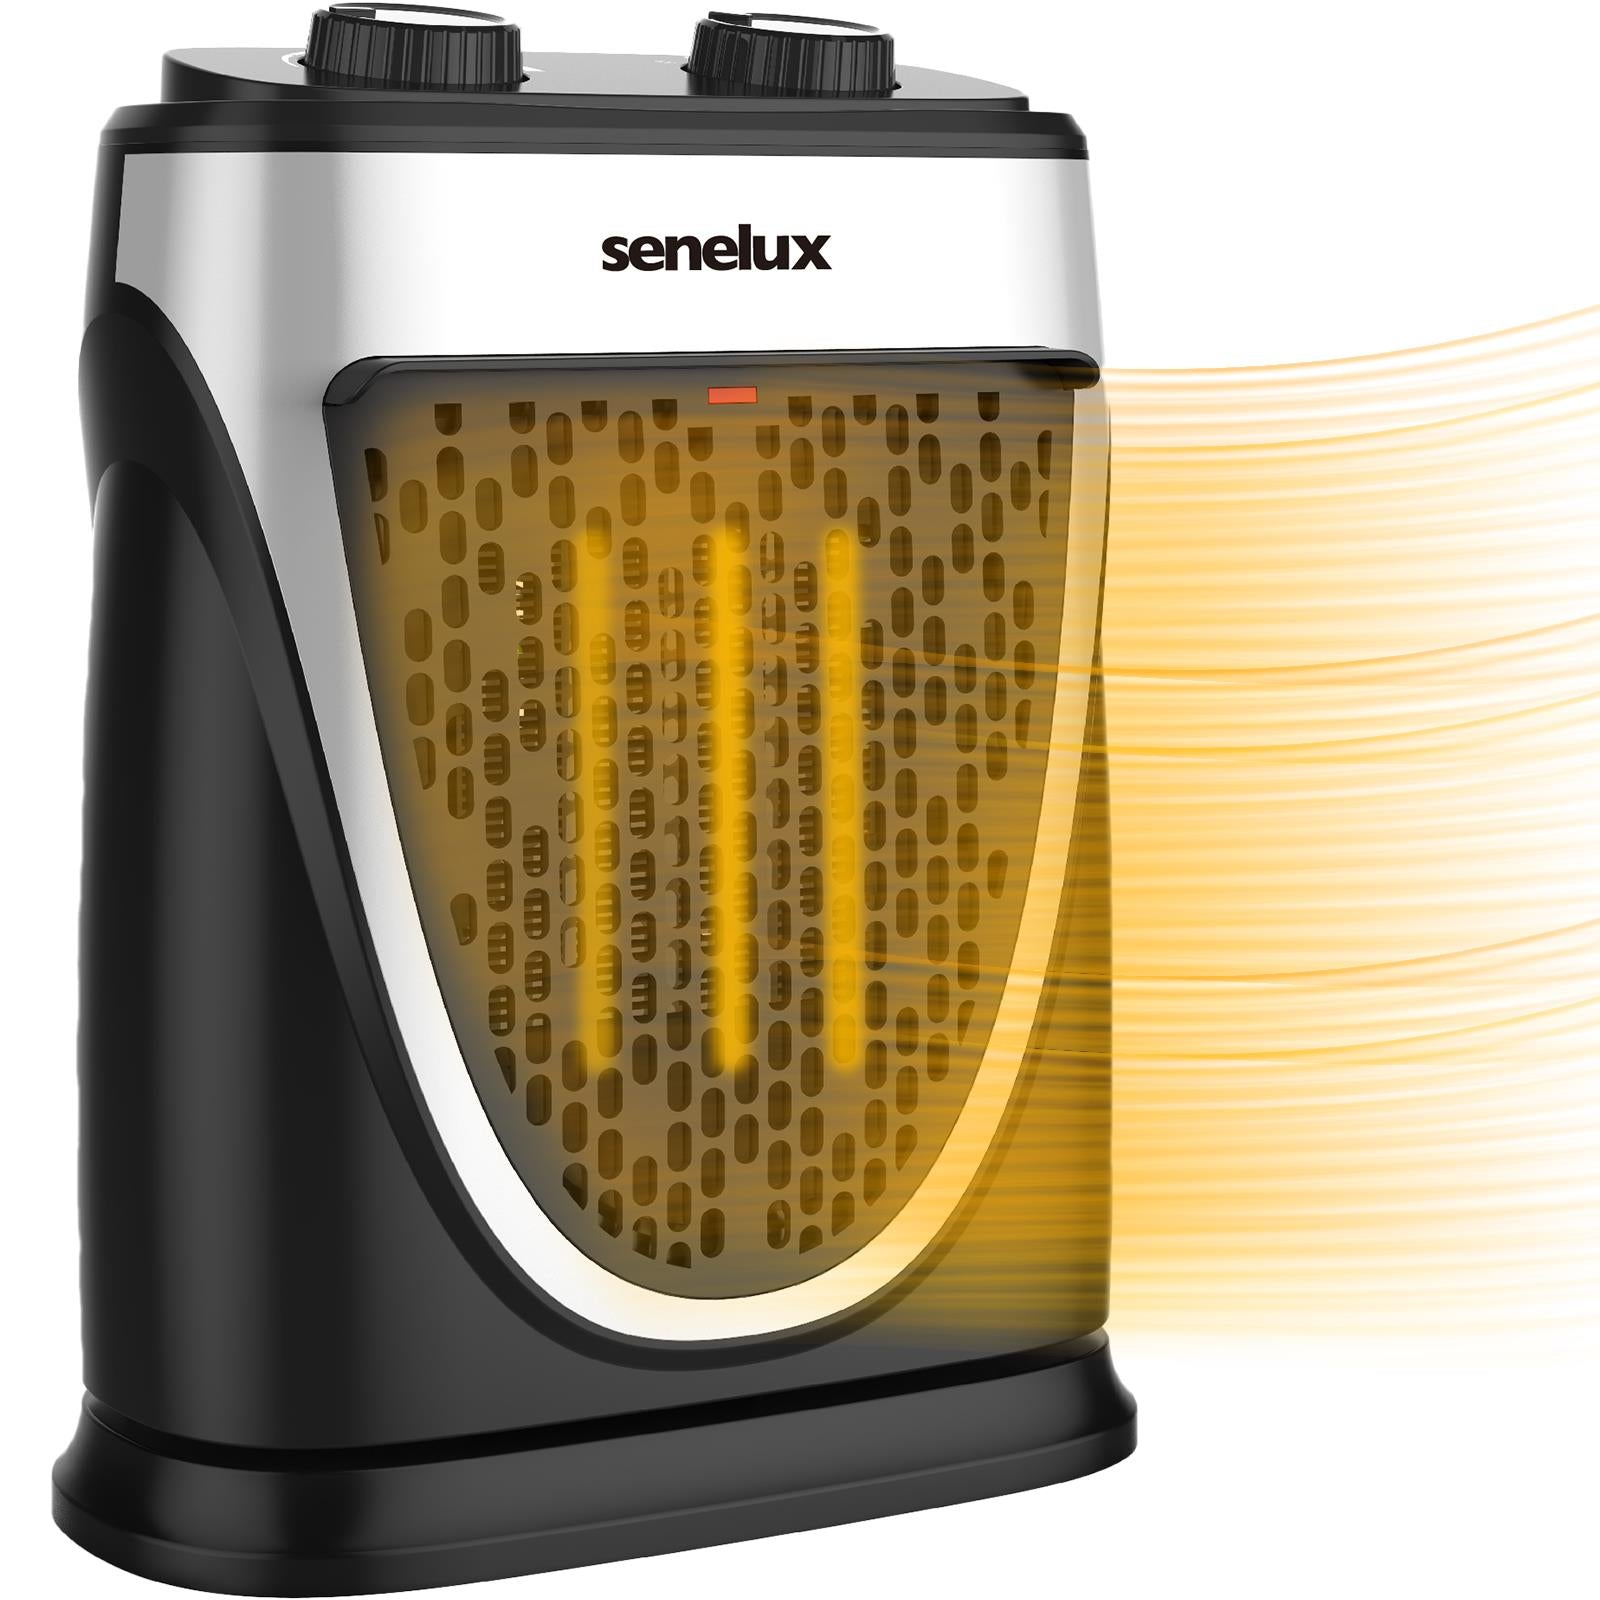 Senelux Mini Heater 1500W PTC Electric Ceramic Portable Heater with Adjustable Thermostat